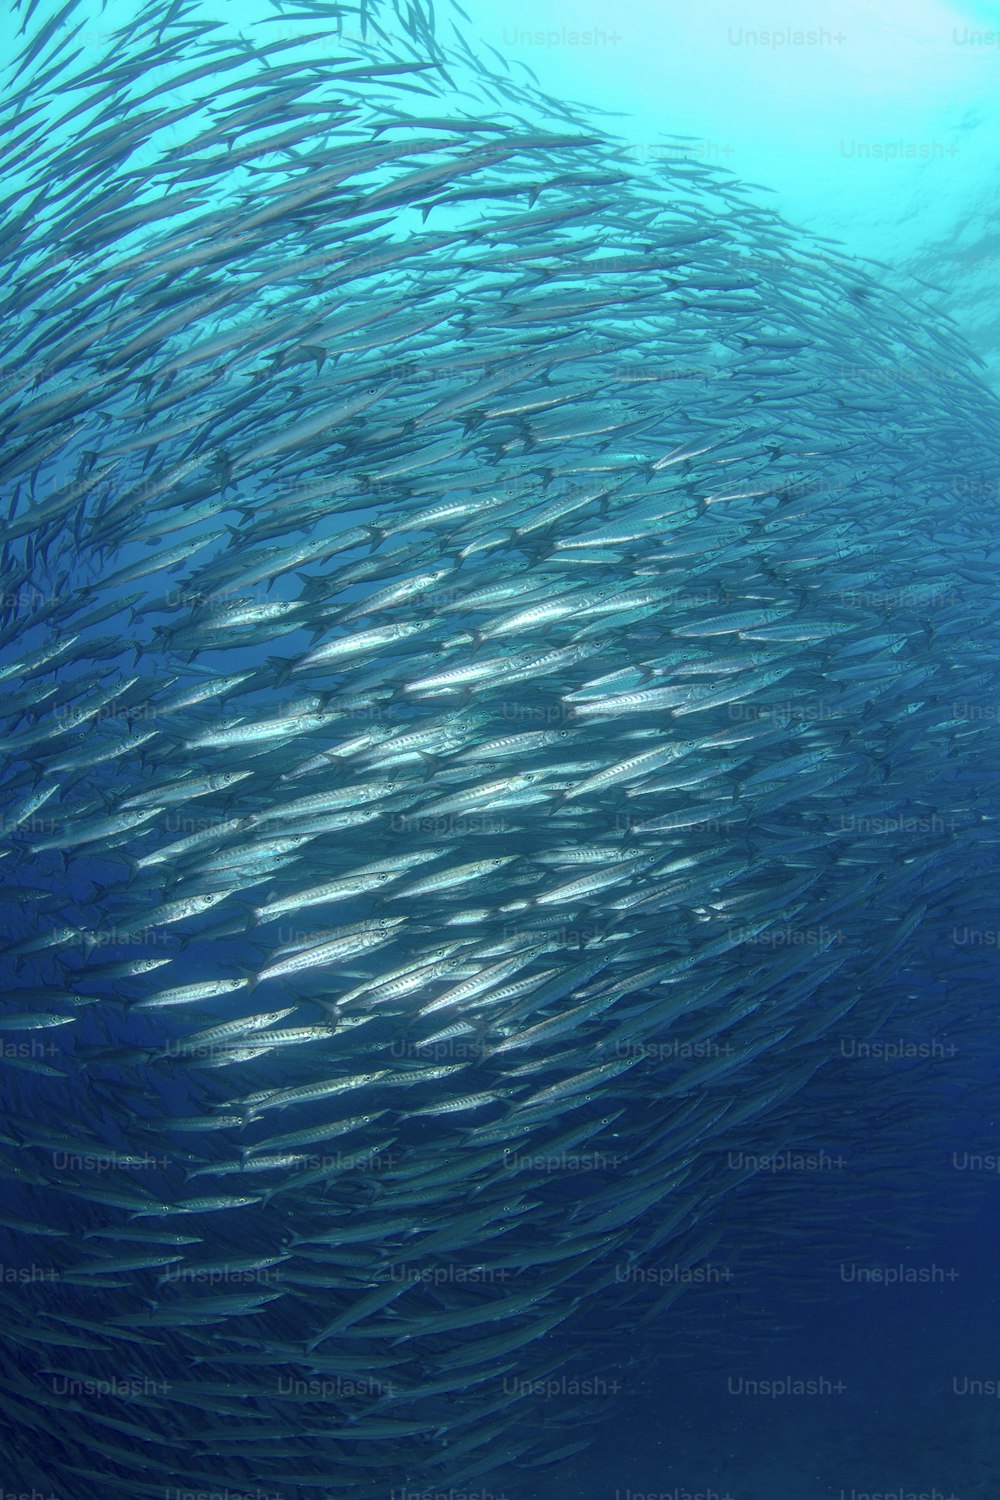 A school of barracuda in Pacific